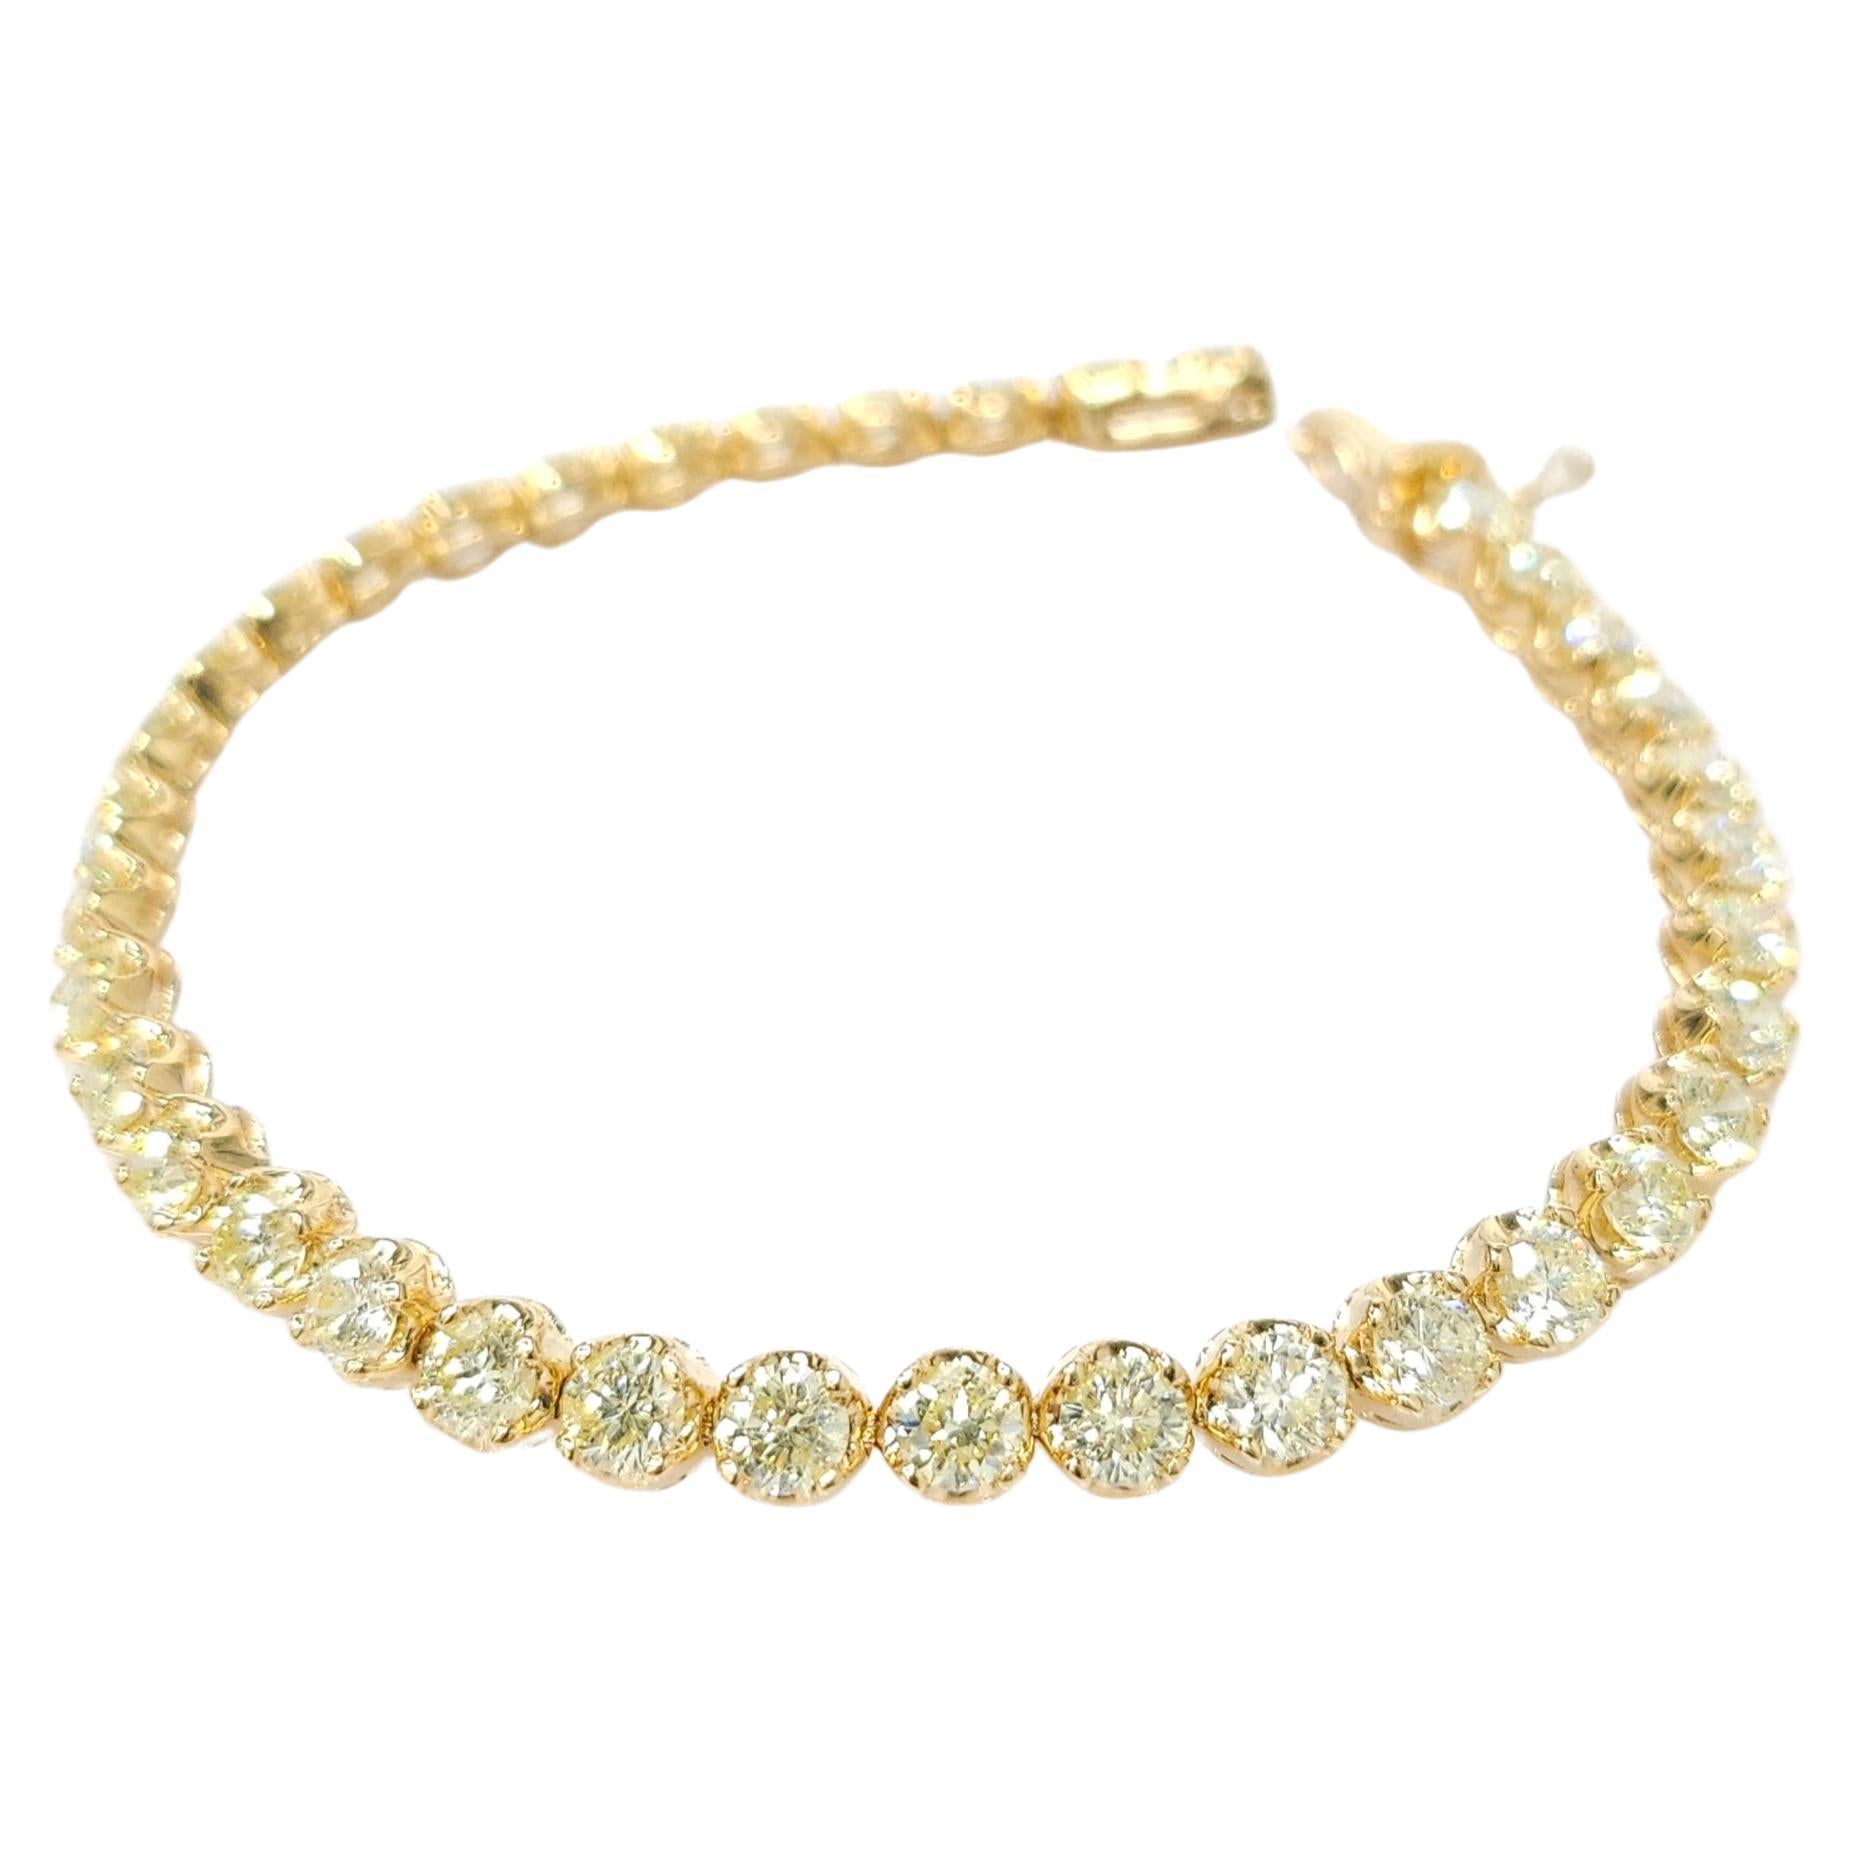 6.56 Carat Round Diamond Tennis Bracelet in 18K Yellow Gold For Sale